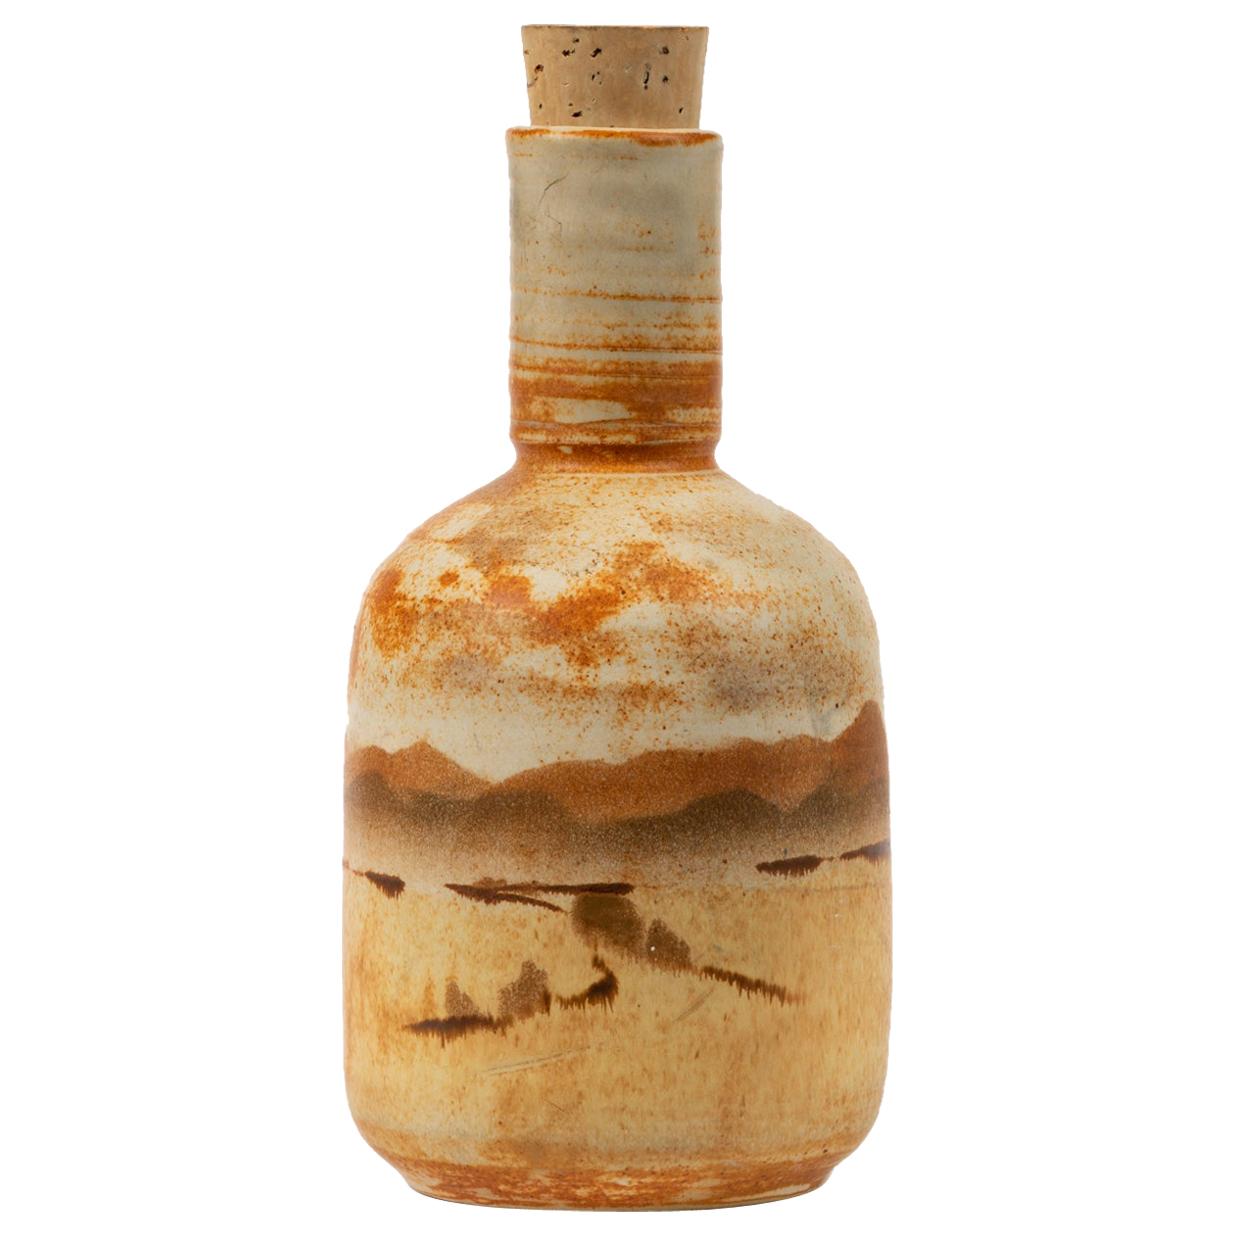 California Studio Pottery Bottle with Cork Stopper 'JB'